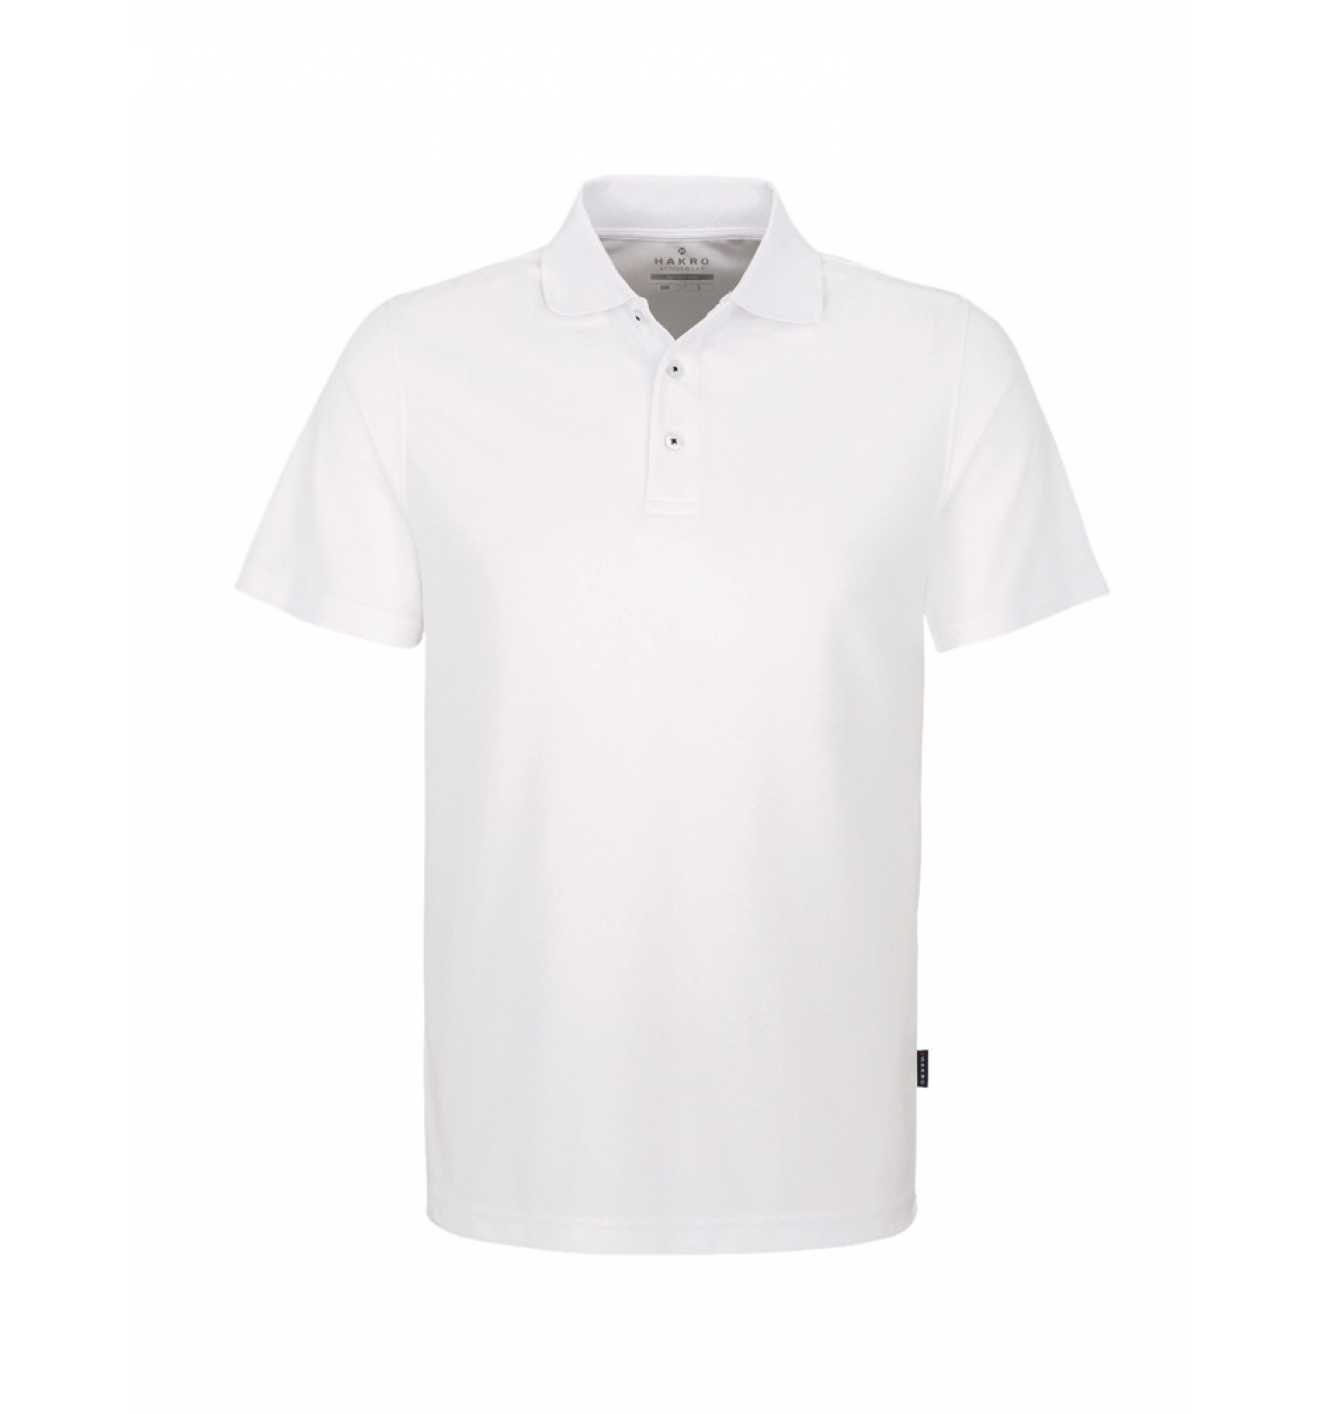 Hakro Poloshirt Coolmax #806 Herren (Kein Set, 1-tlg., 1er-Pack) sportlich körpernah geschnitten weiß